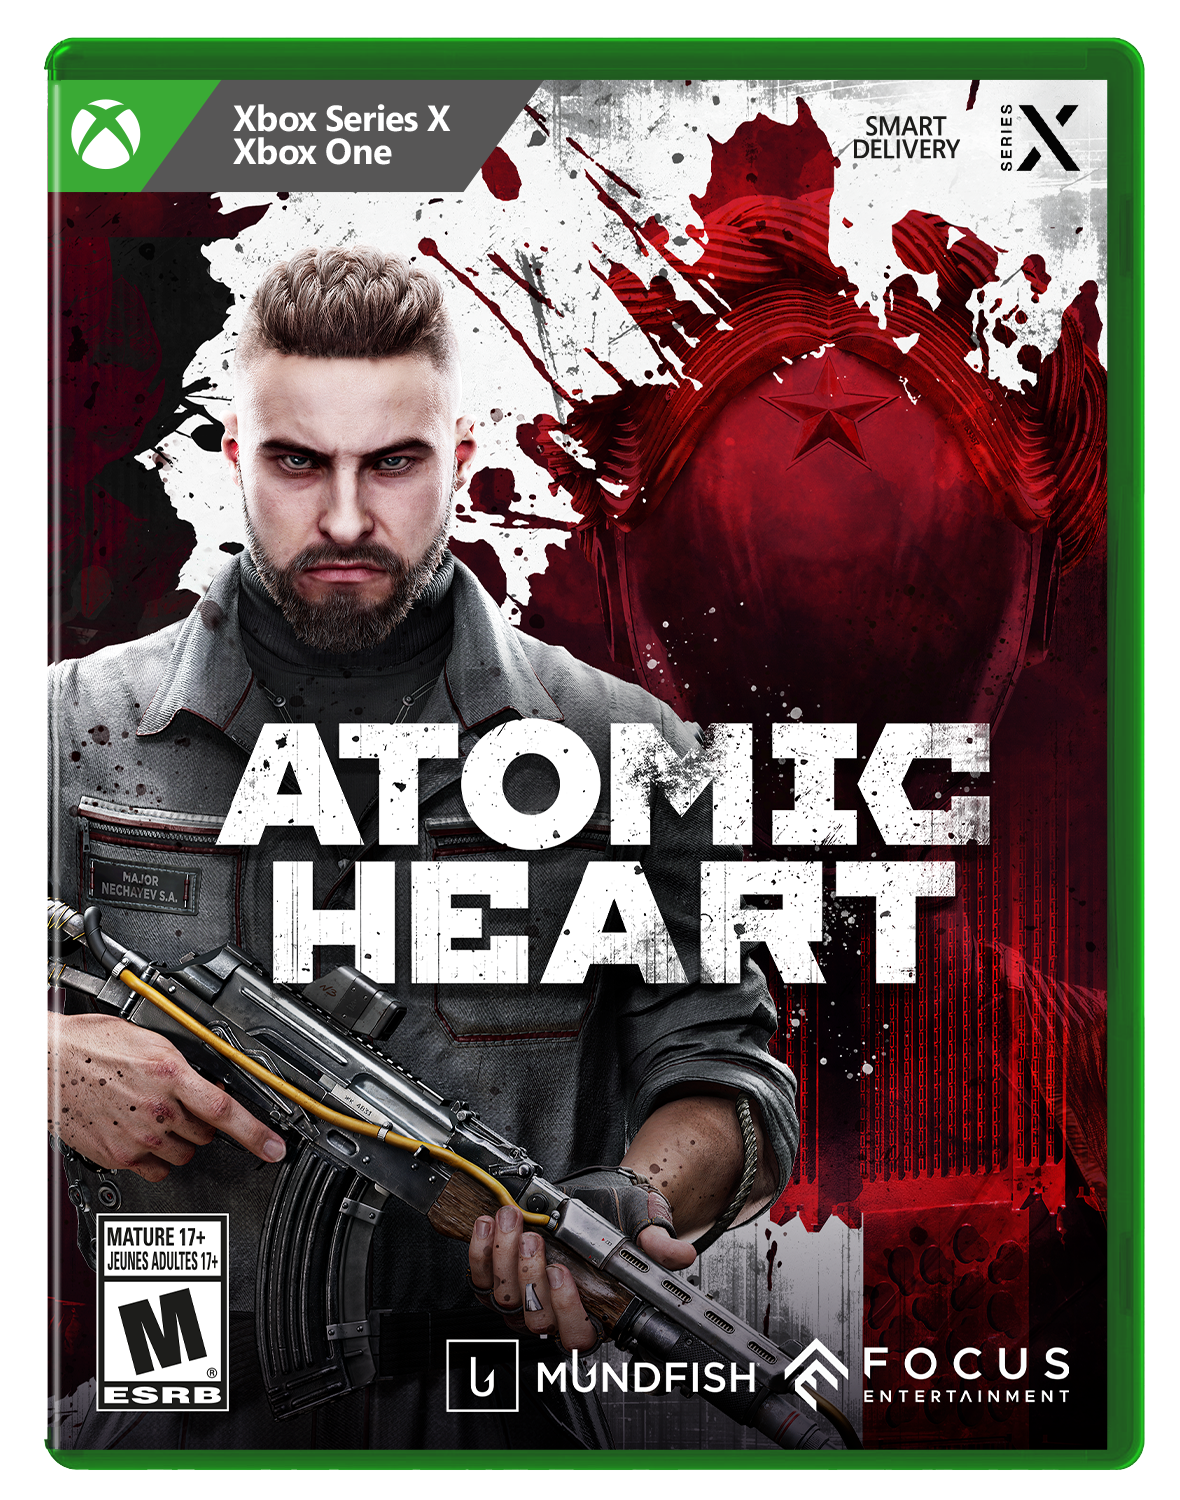 Atomic Heart - Premium Edition - Xbox One, Xbox Series X